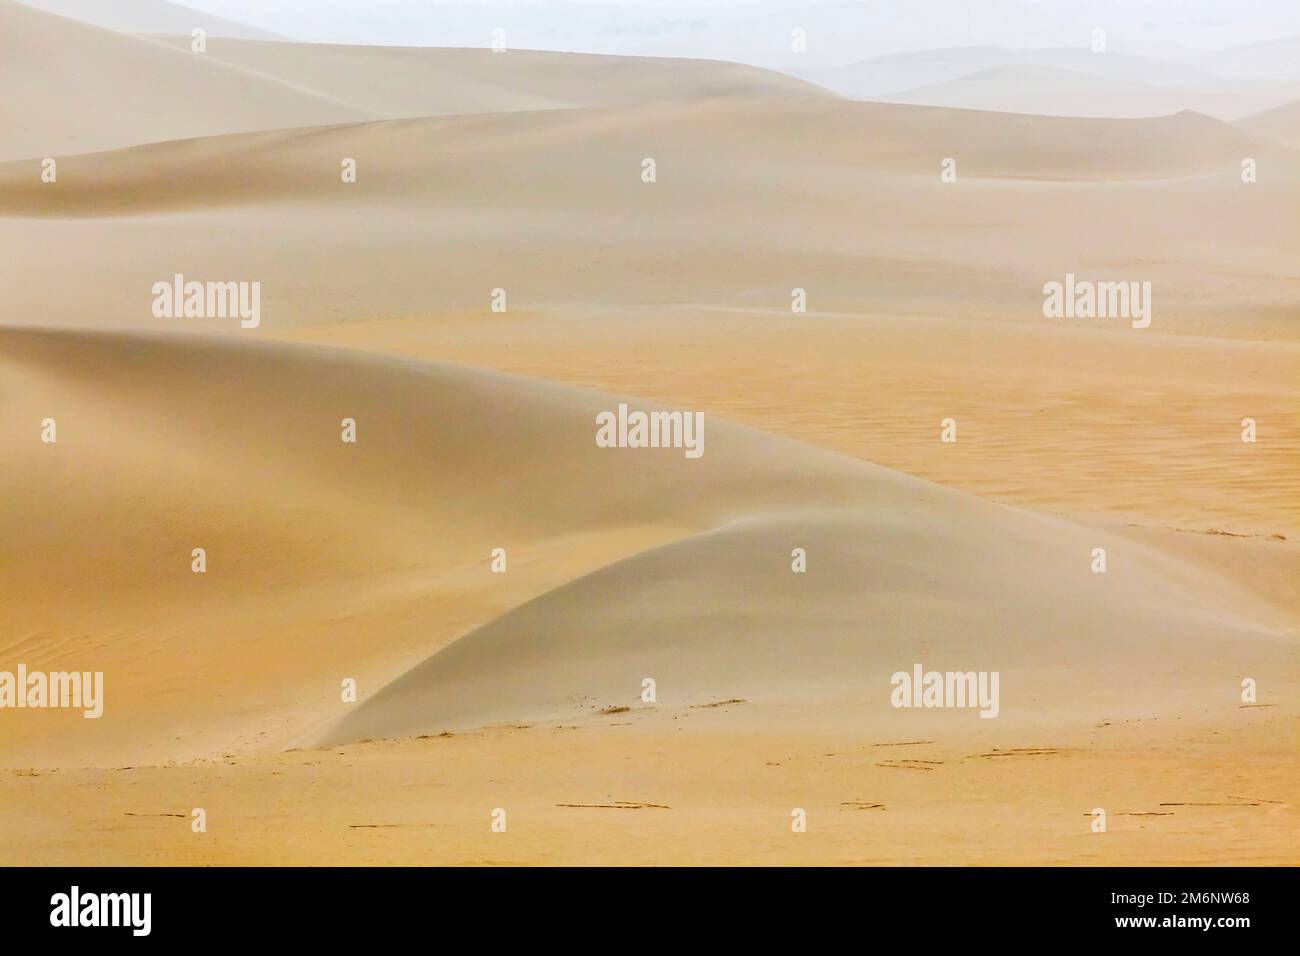 Deserto Taklamakan shifting-sabbie nella nebbia. Bacino di Tim. Regione autonoma dello Xinjiang (Sinkiang). Cina. Foto Stock